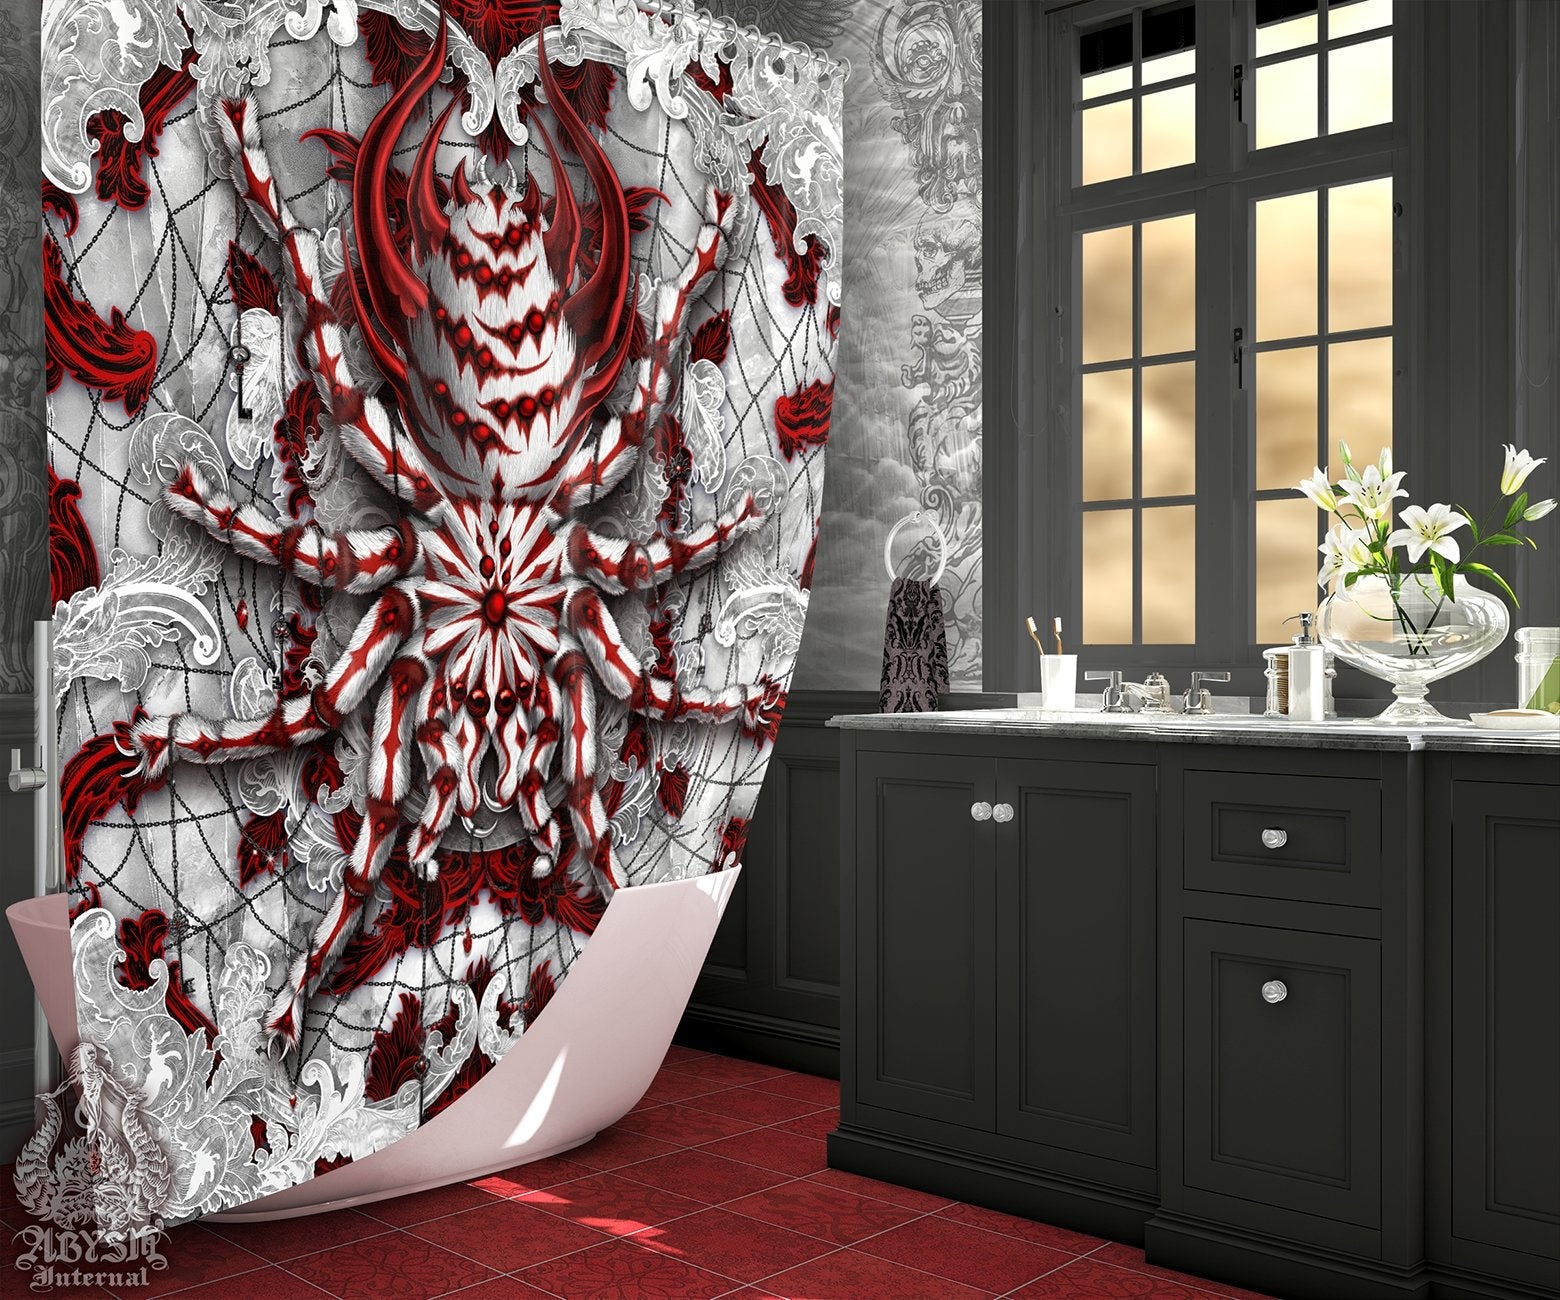 Bloody White Goth Shower Curtain, Gothic Bathroom Decor, Alternative Home - Spider, Tarantula Art - Abysm Internal